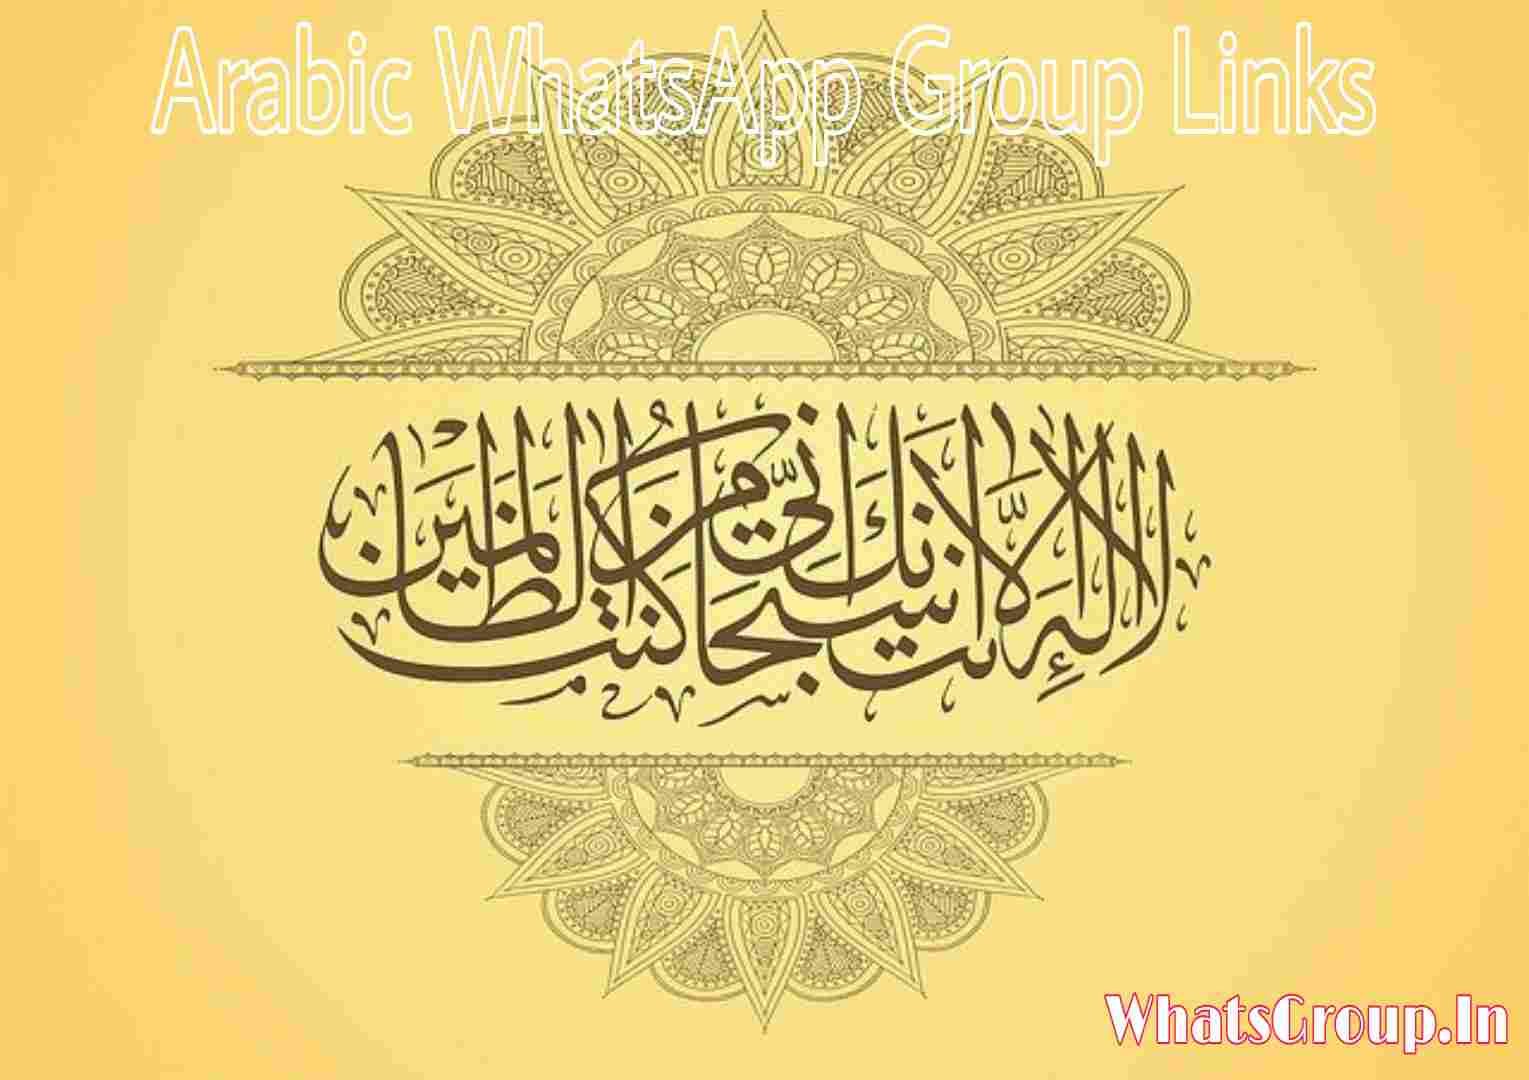 Arabic WhatsApp Group Links